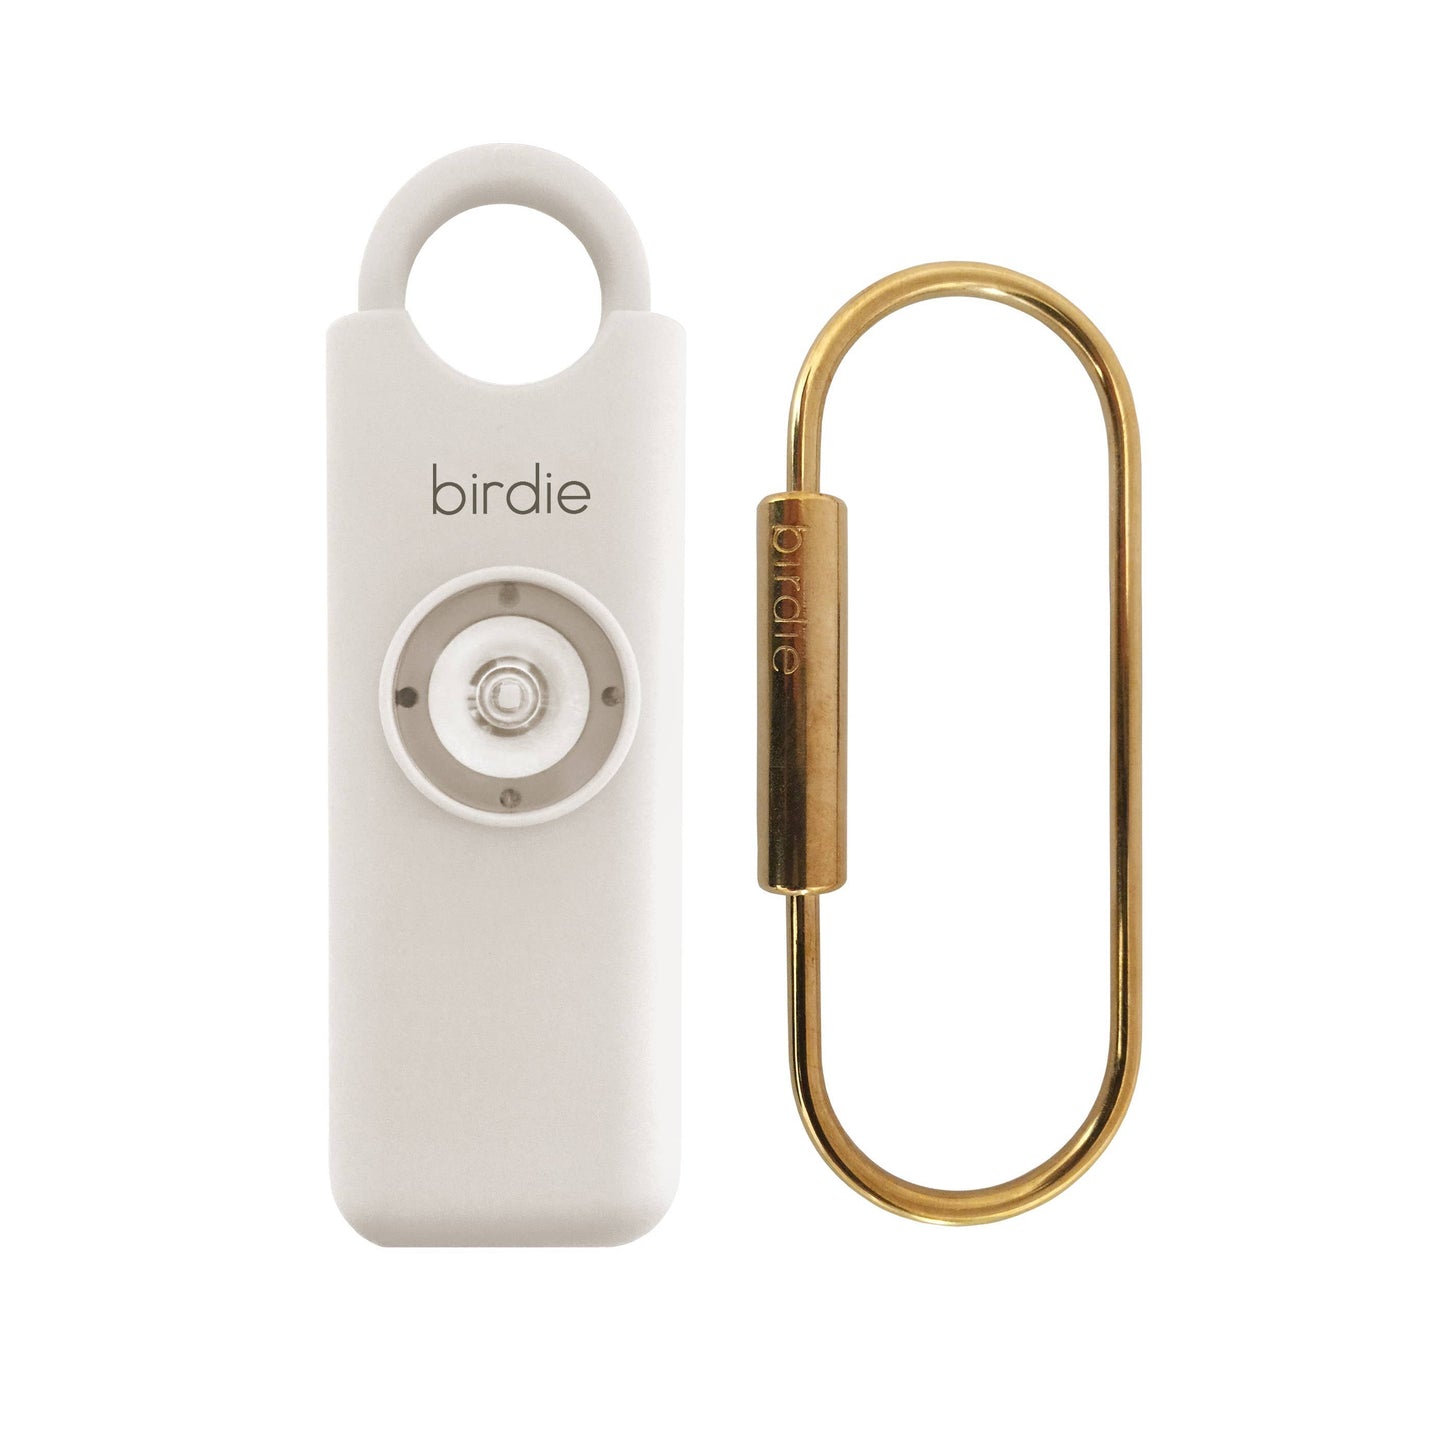 She's Birdie - She's Birdie Personal Safety Alarm: Single / Blossom